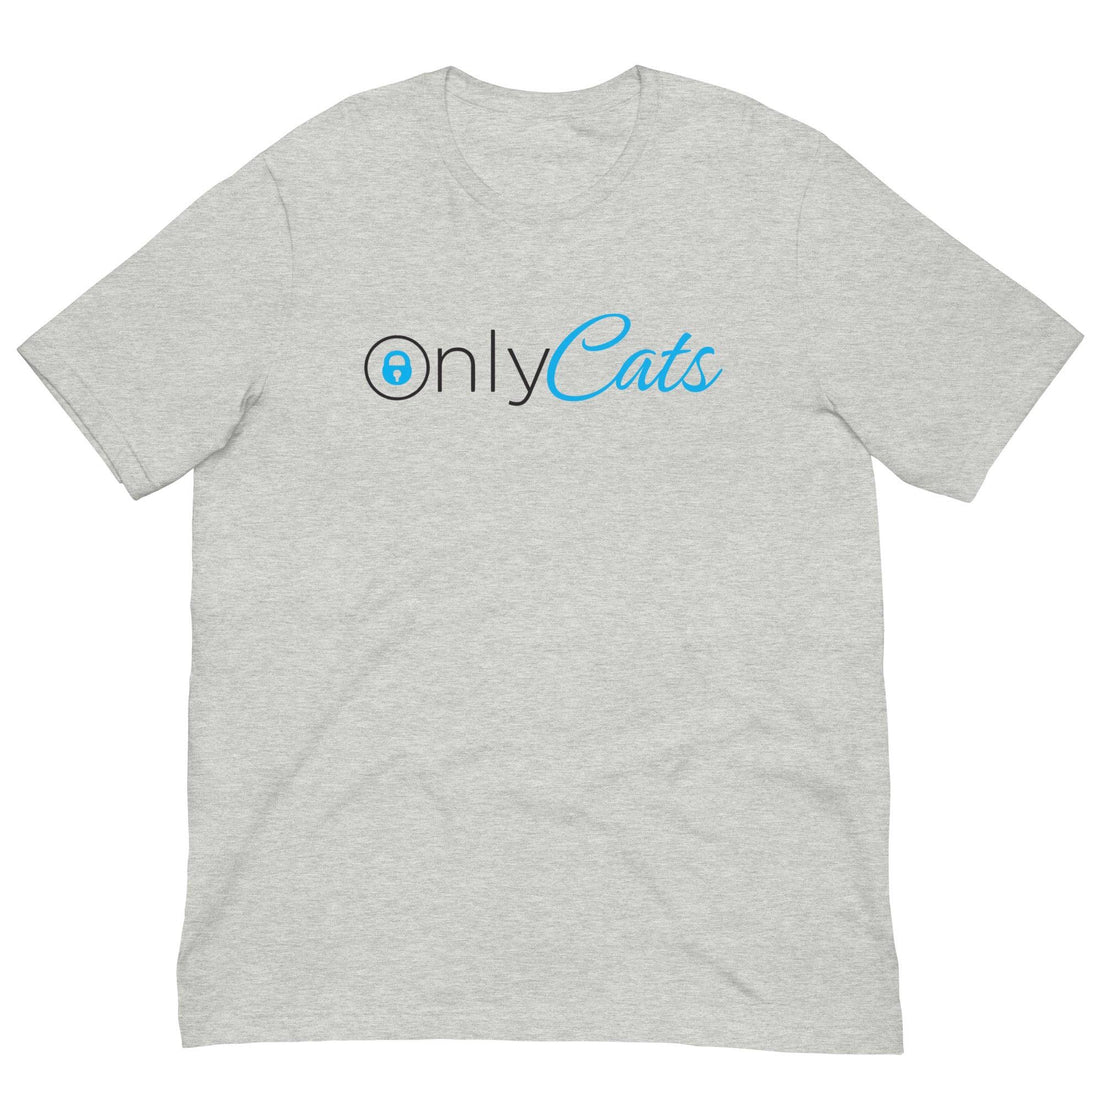 Only Cats Cat Shirt - Cat Shirts USA